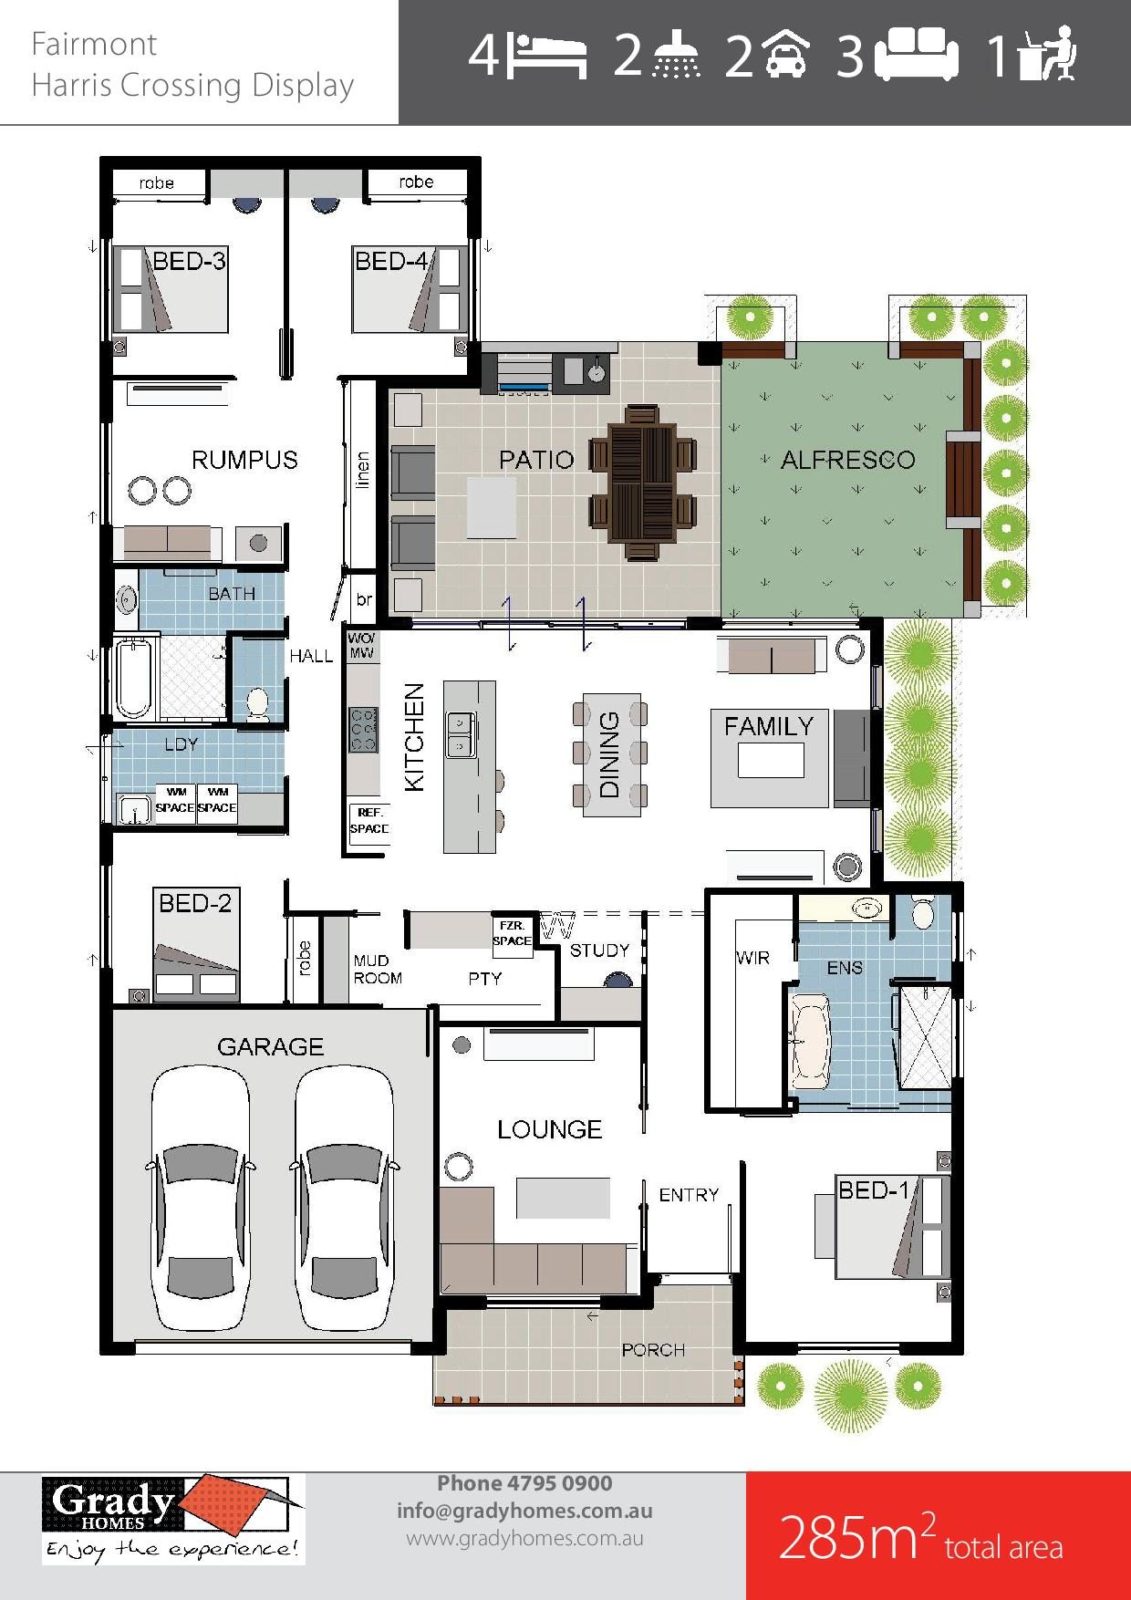 Fairmont Display - Grady Homes Floor Plan 1